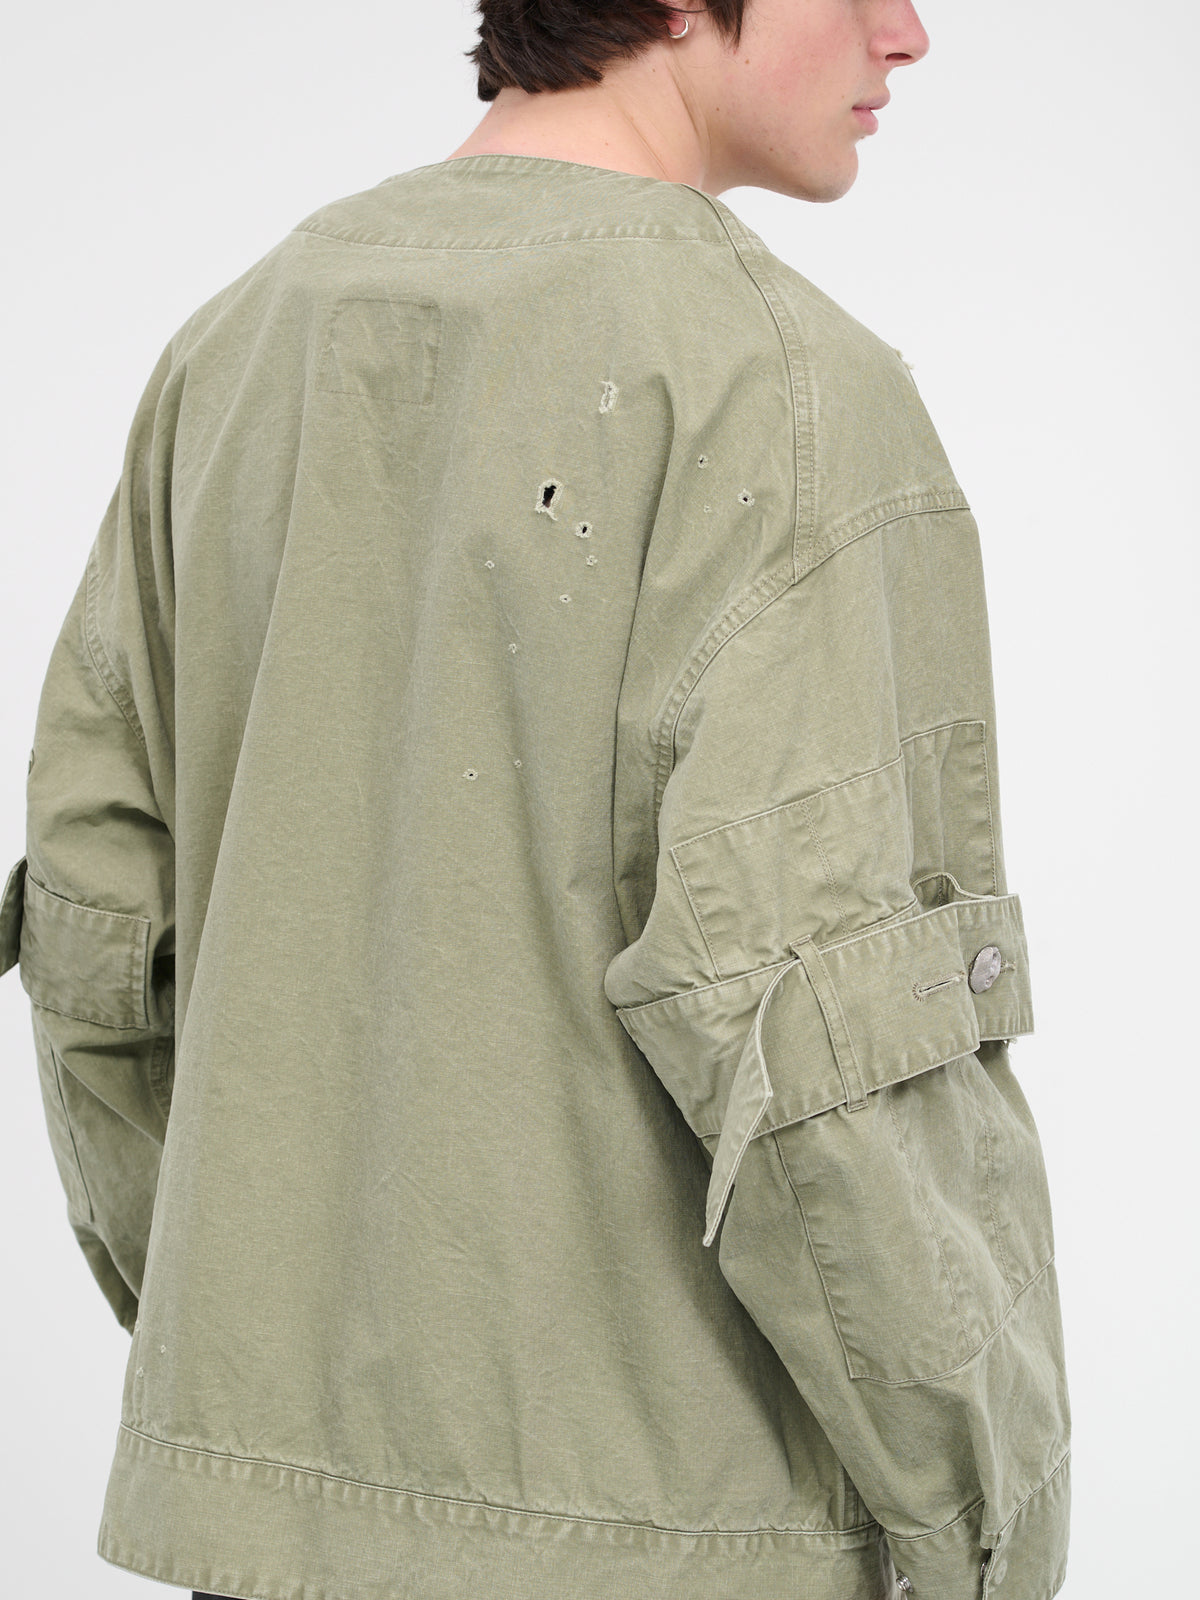 Distressed Strap Jacket (BL04-KHAKI)